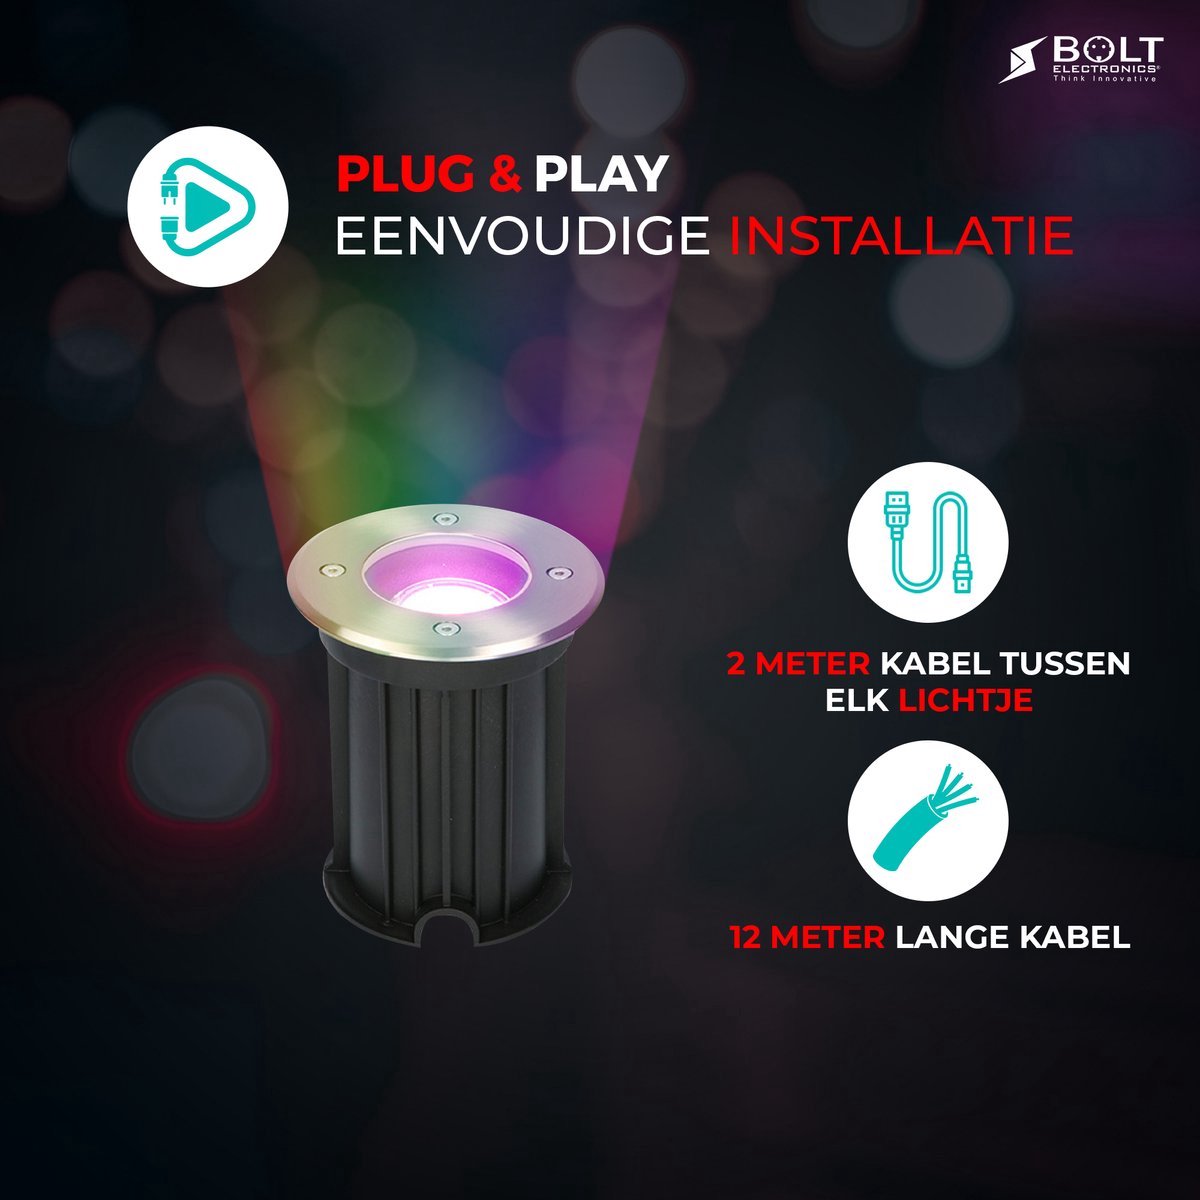 Bolt Electronics® RGB LED Grondspots met app bediening 9 stuks